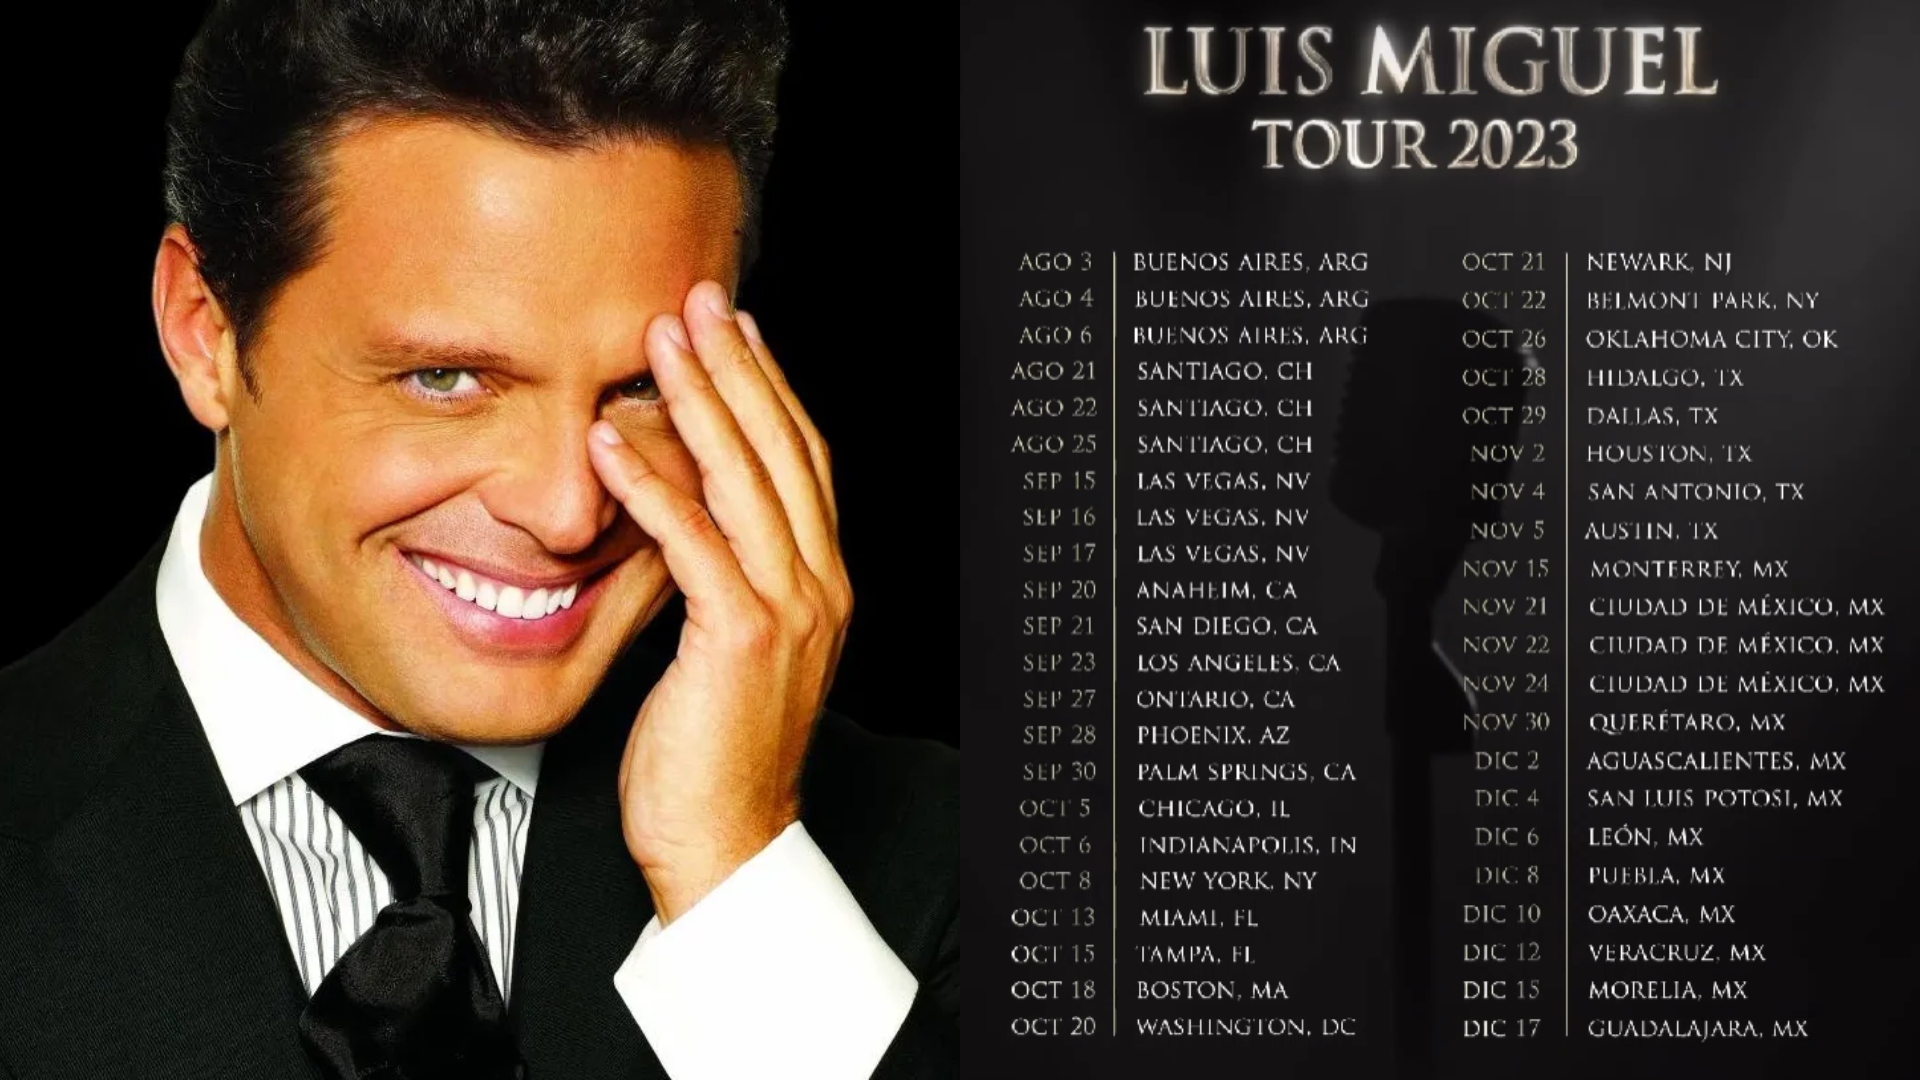 Luis Miguel tour 2023 Tickets, Dates & Concert Schedule